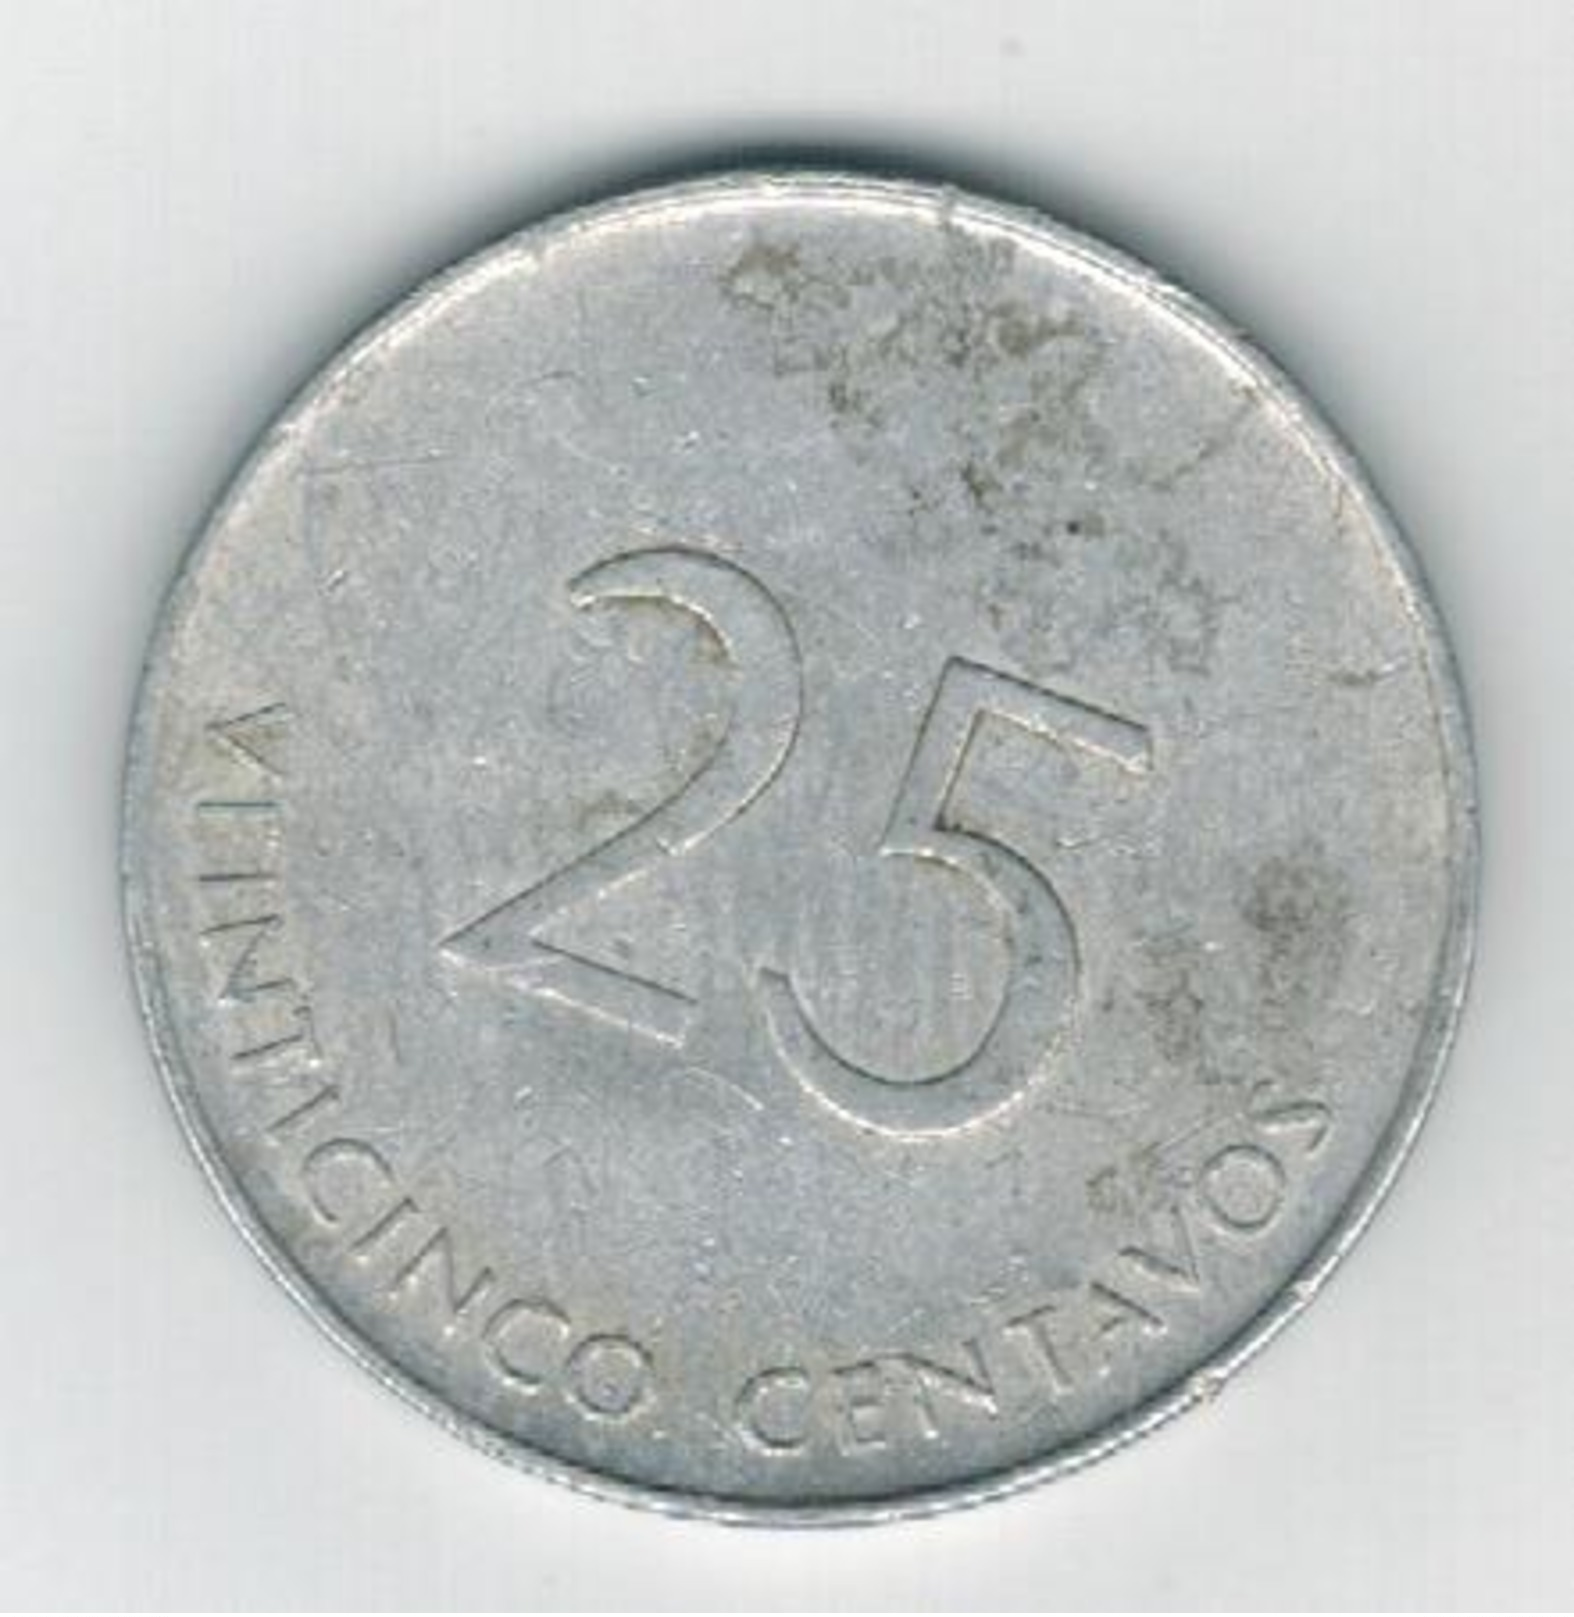 Cuba 25 Centavos 1988, INTUR. (Al)  Used,  Free Ship. To USA. - Cuba